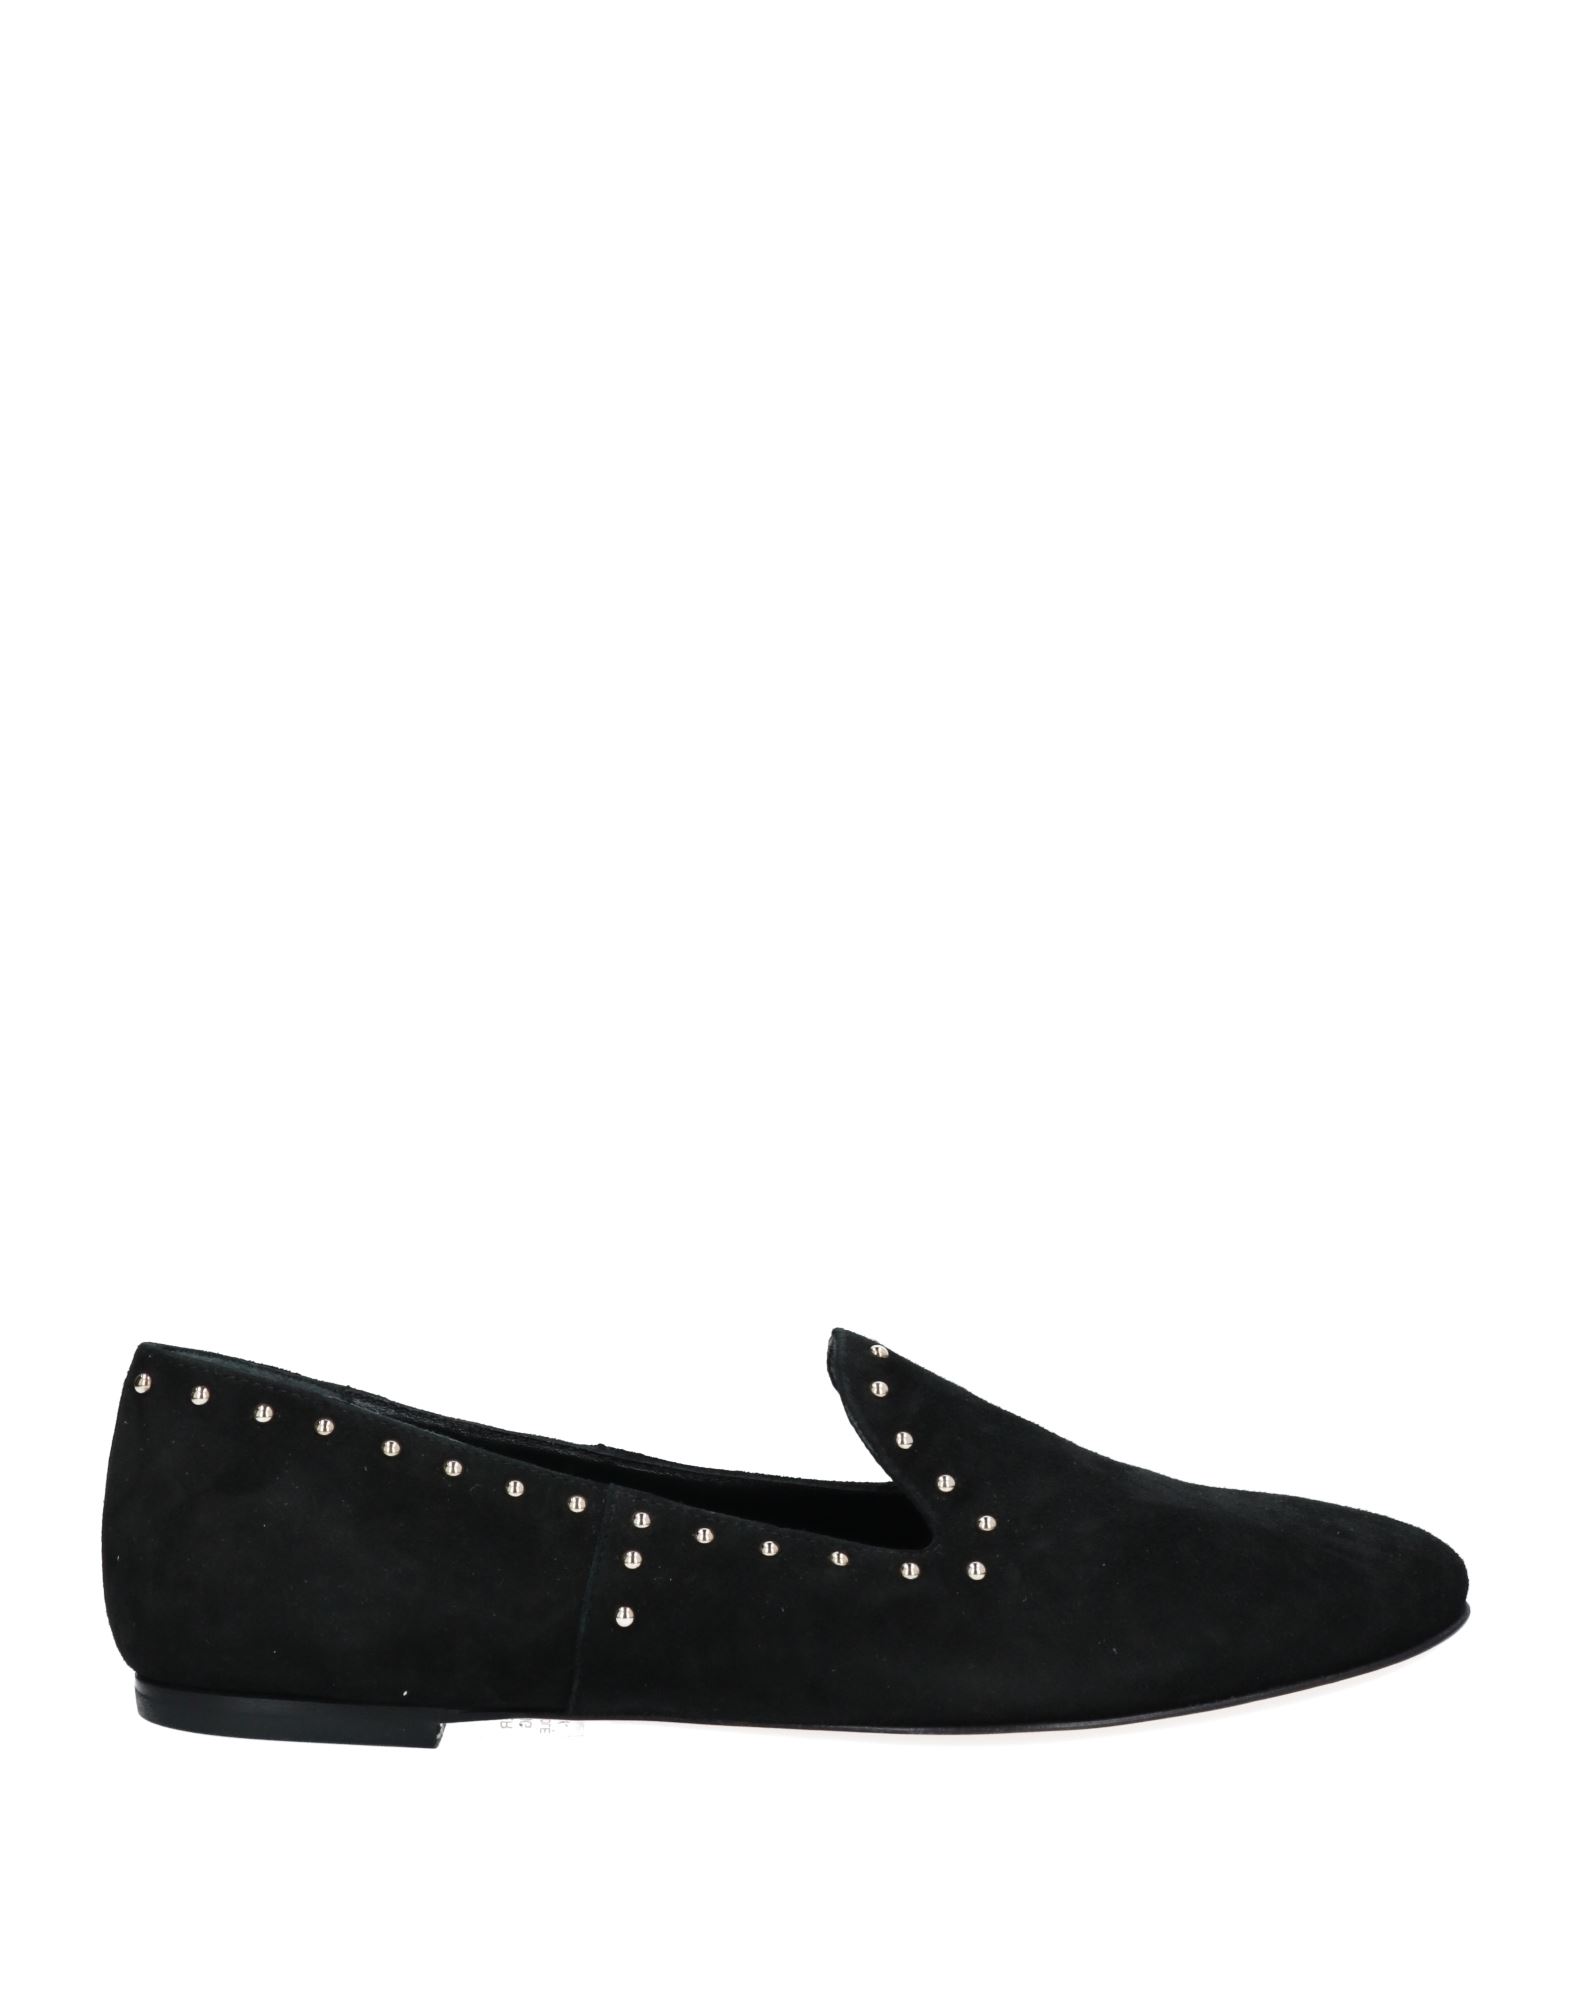 Shop Agl Attilio Giusti Leombruni Agl Woman Loafers Black Size 5 Soft Leather